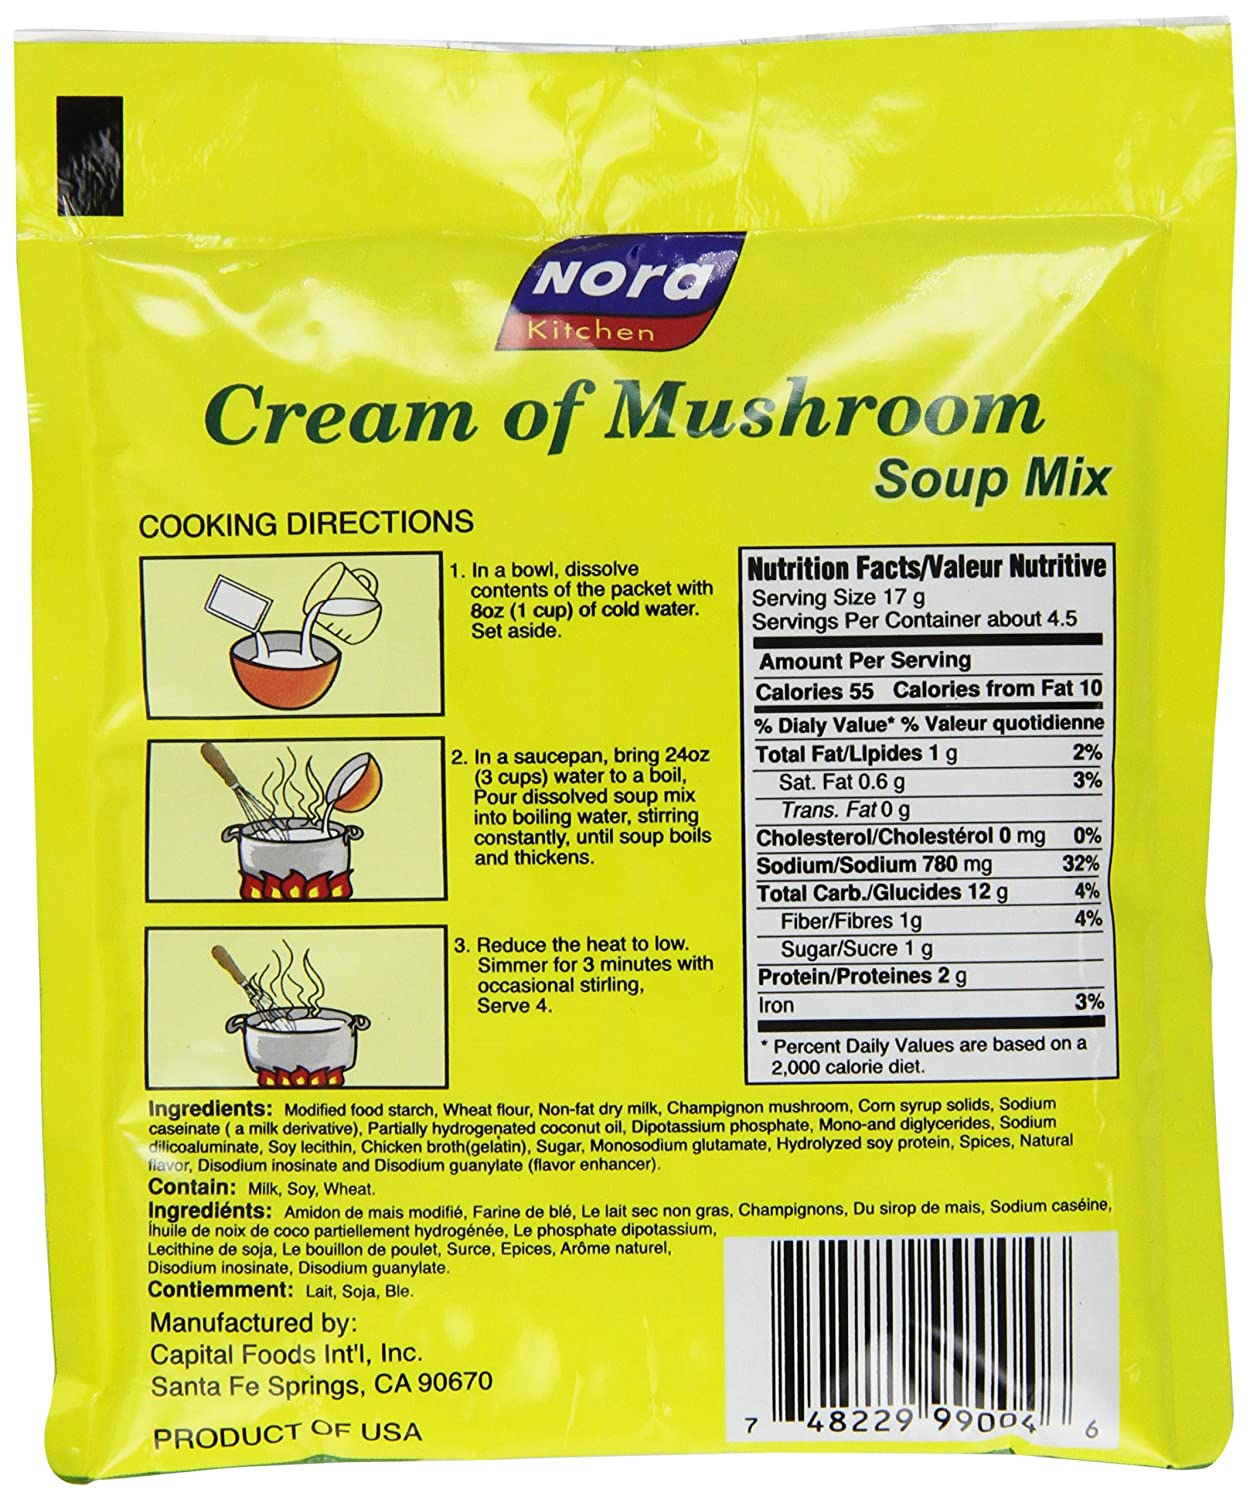 Nora Cream of Mushroom Soup Mix (3-Pack)